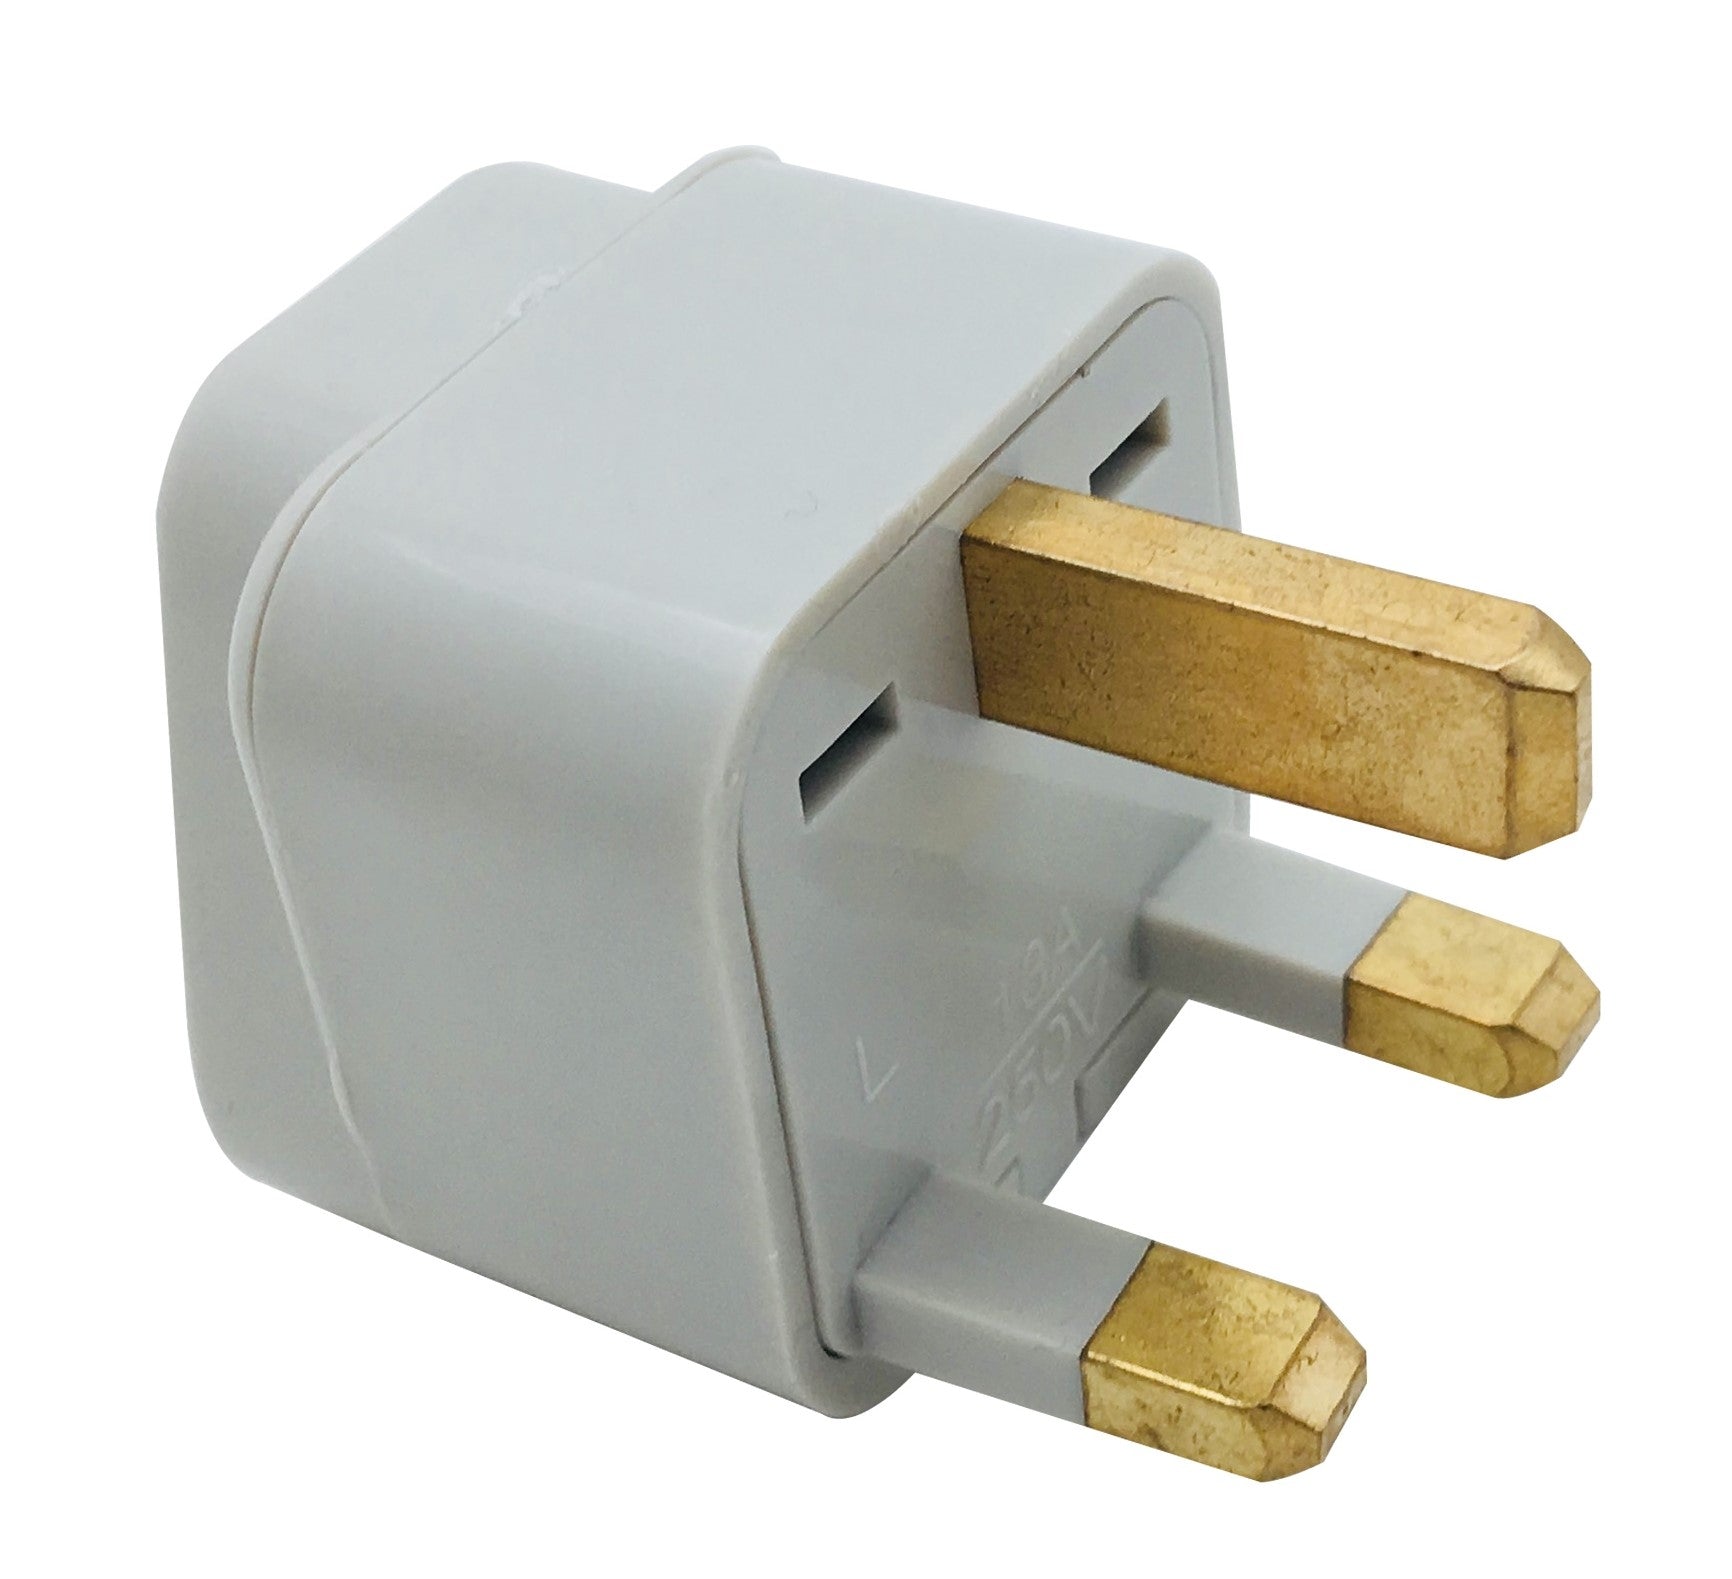 42-0302 Universal Power Plug Adapter: Rectangular blade plug